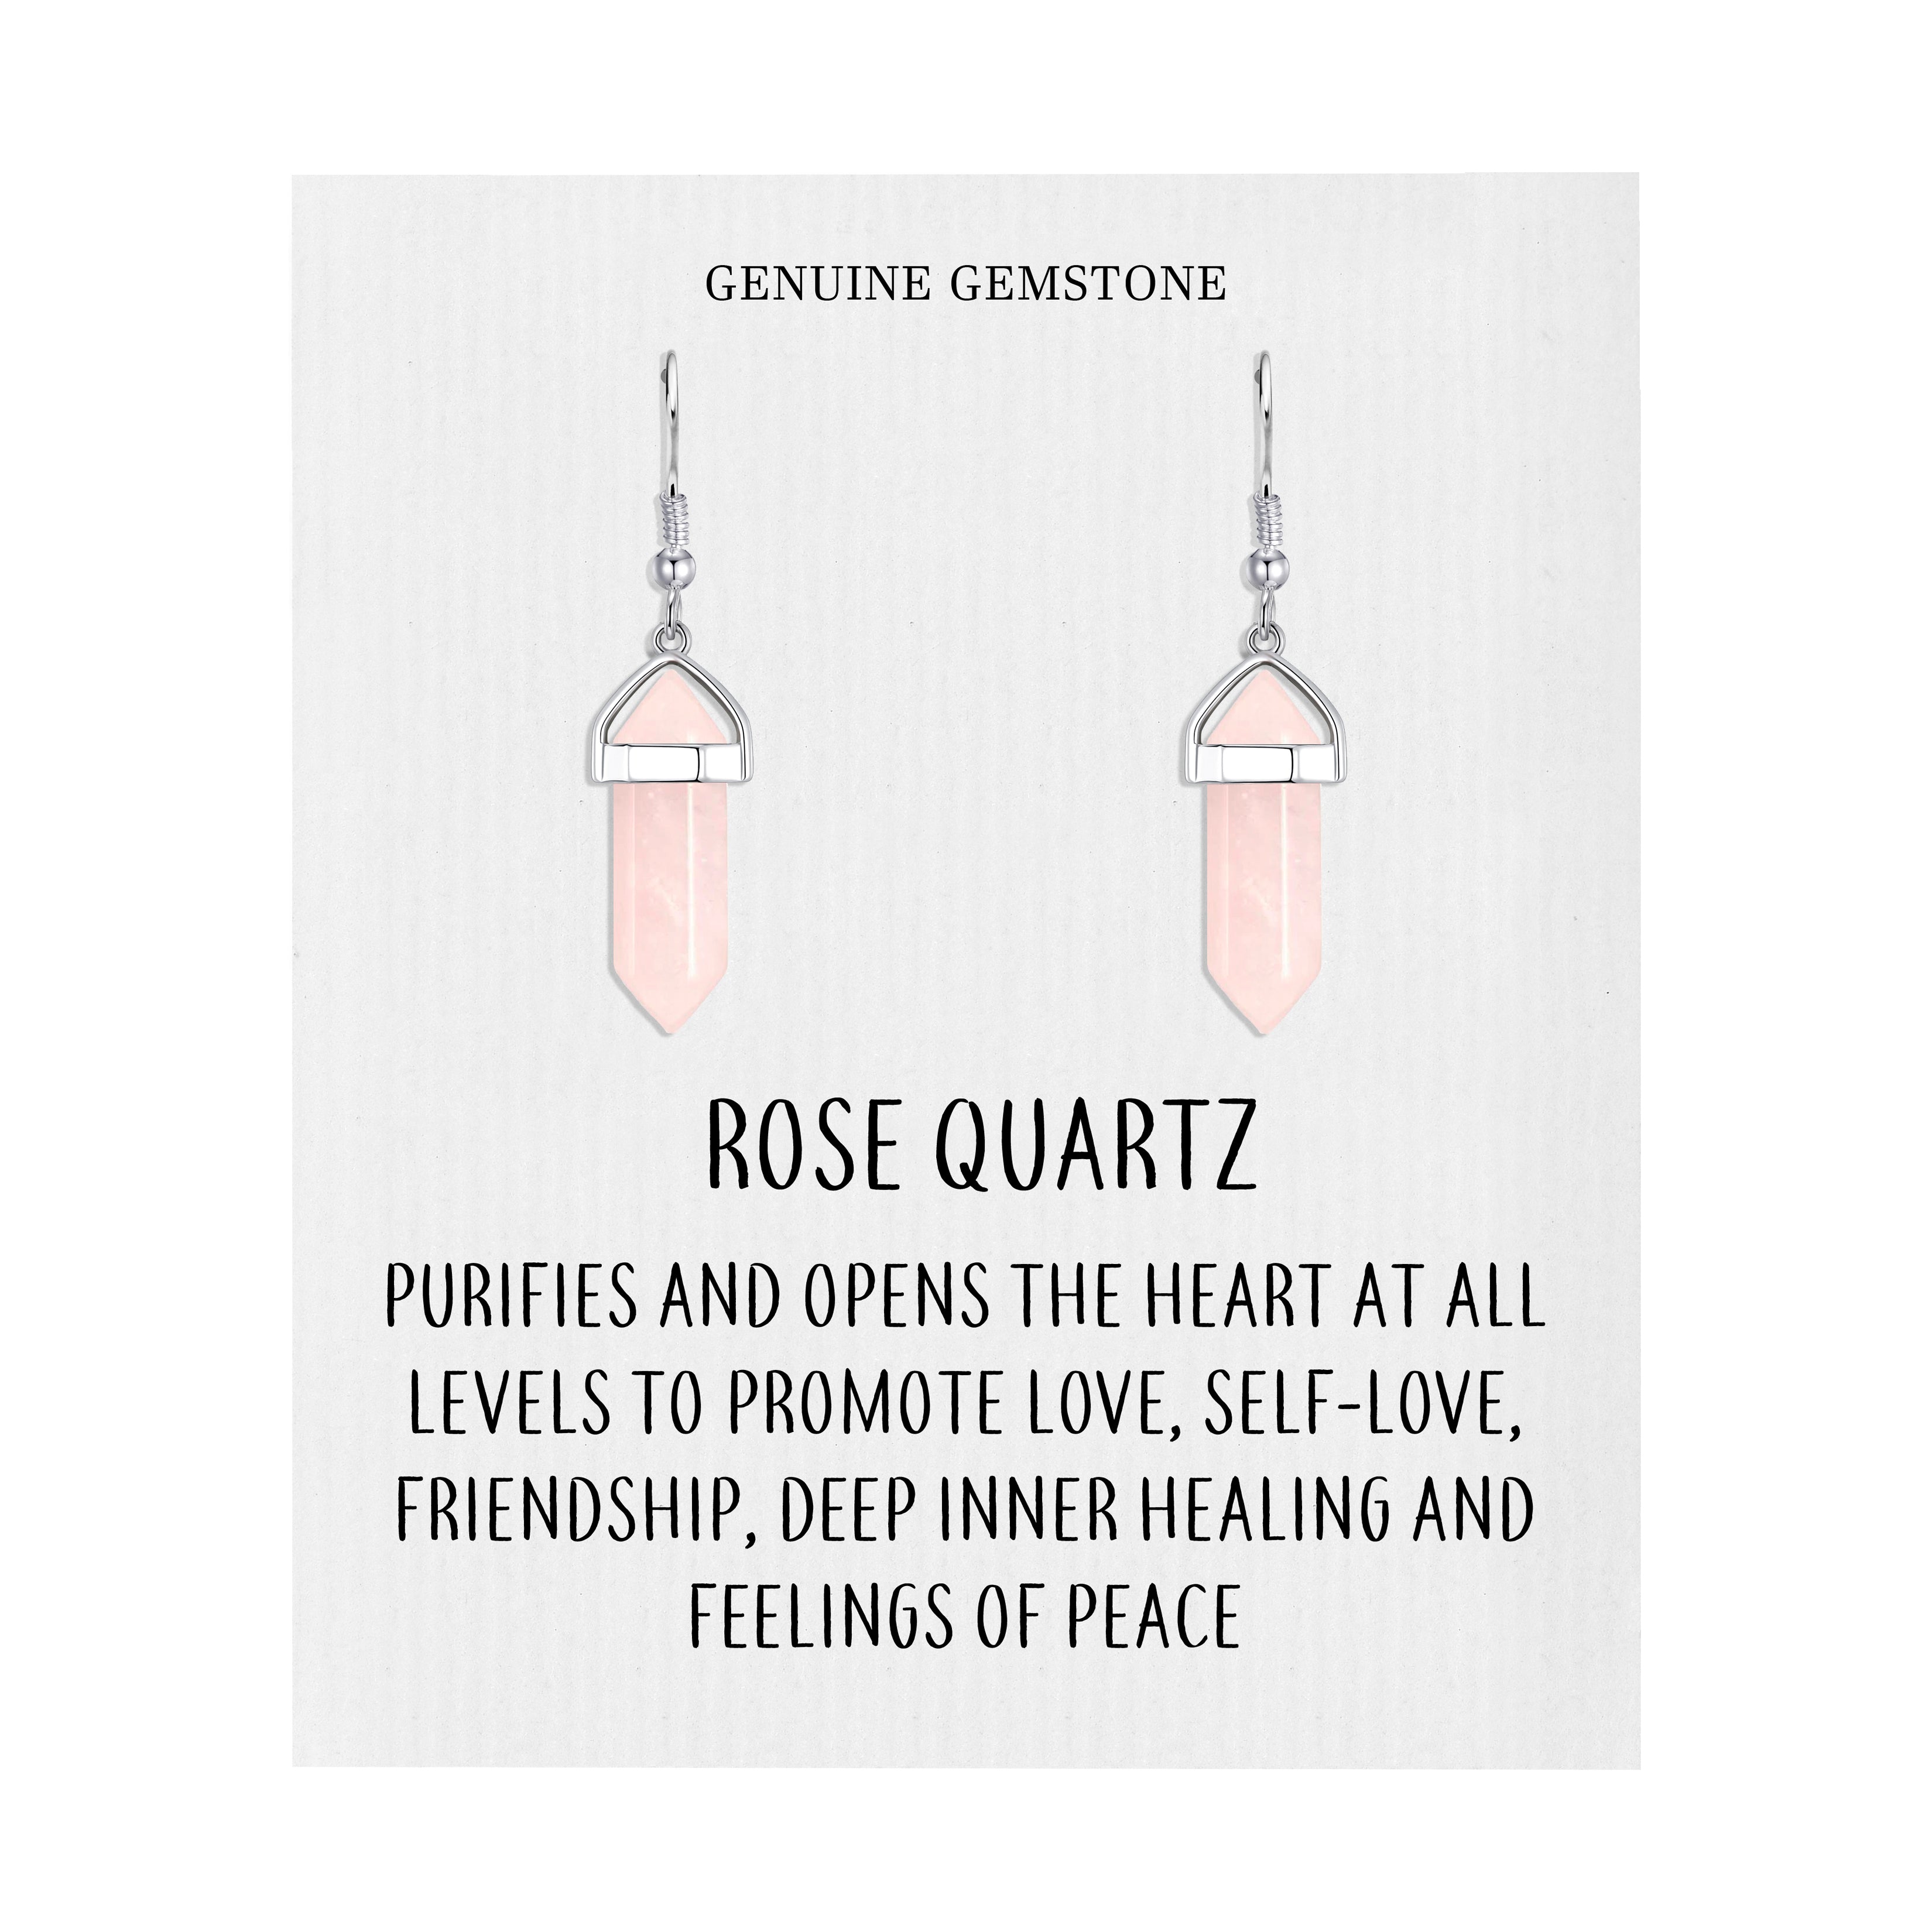 Rose Quartz Gemstone Drop Earrings with Quote Card by Philip Jones Jewellery